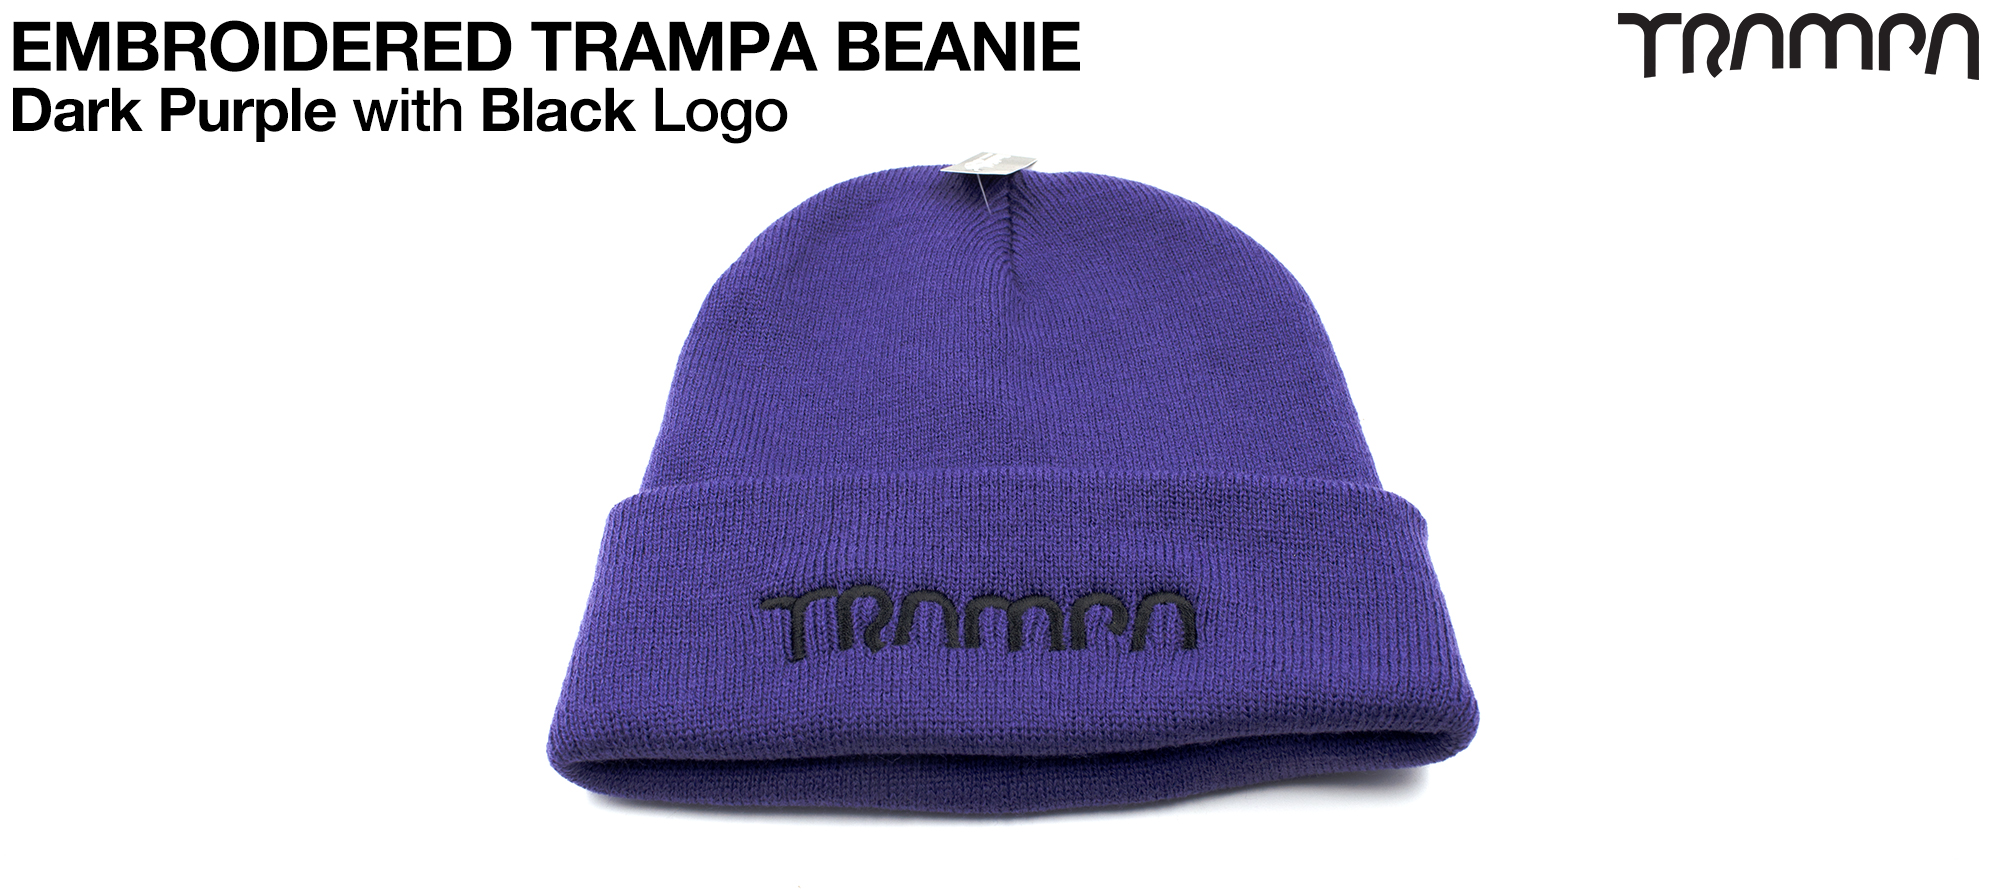 PURPLE Woolly hat with Vivid BLACK TRAMPA logo